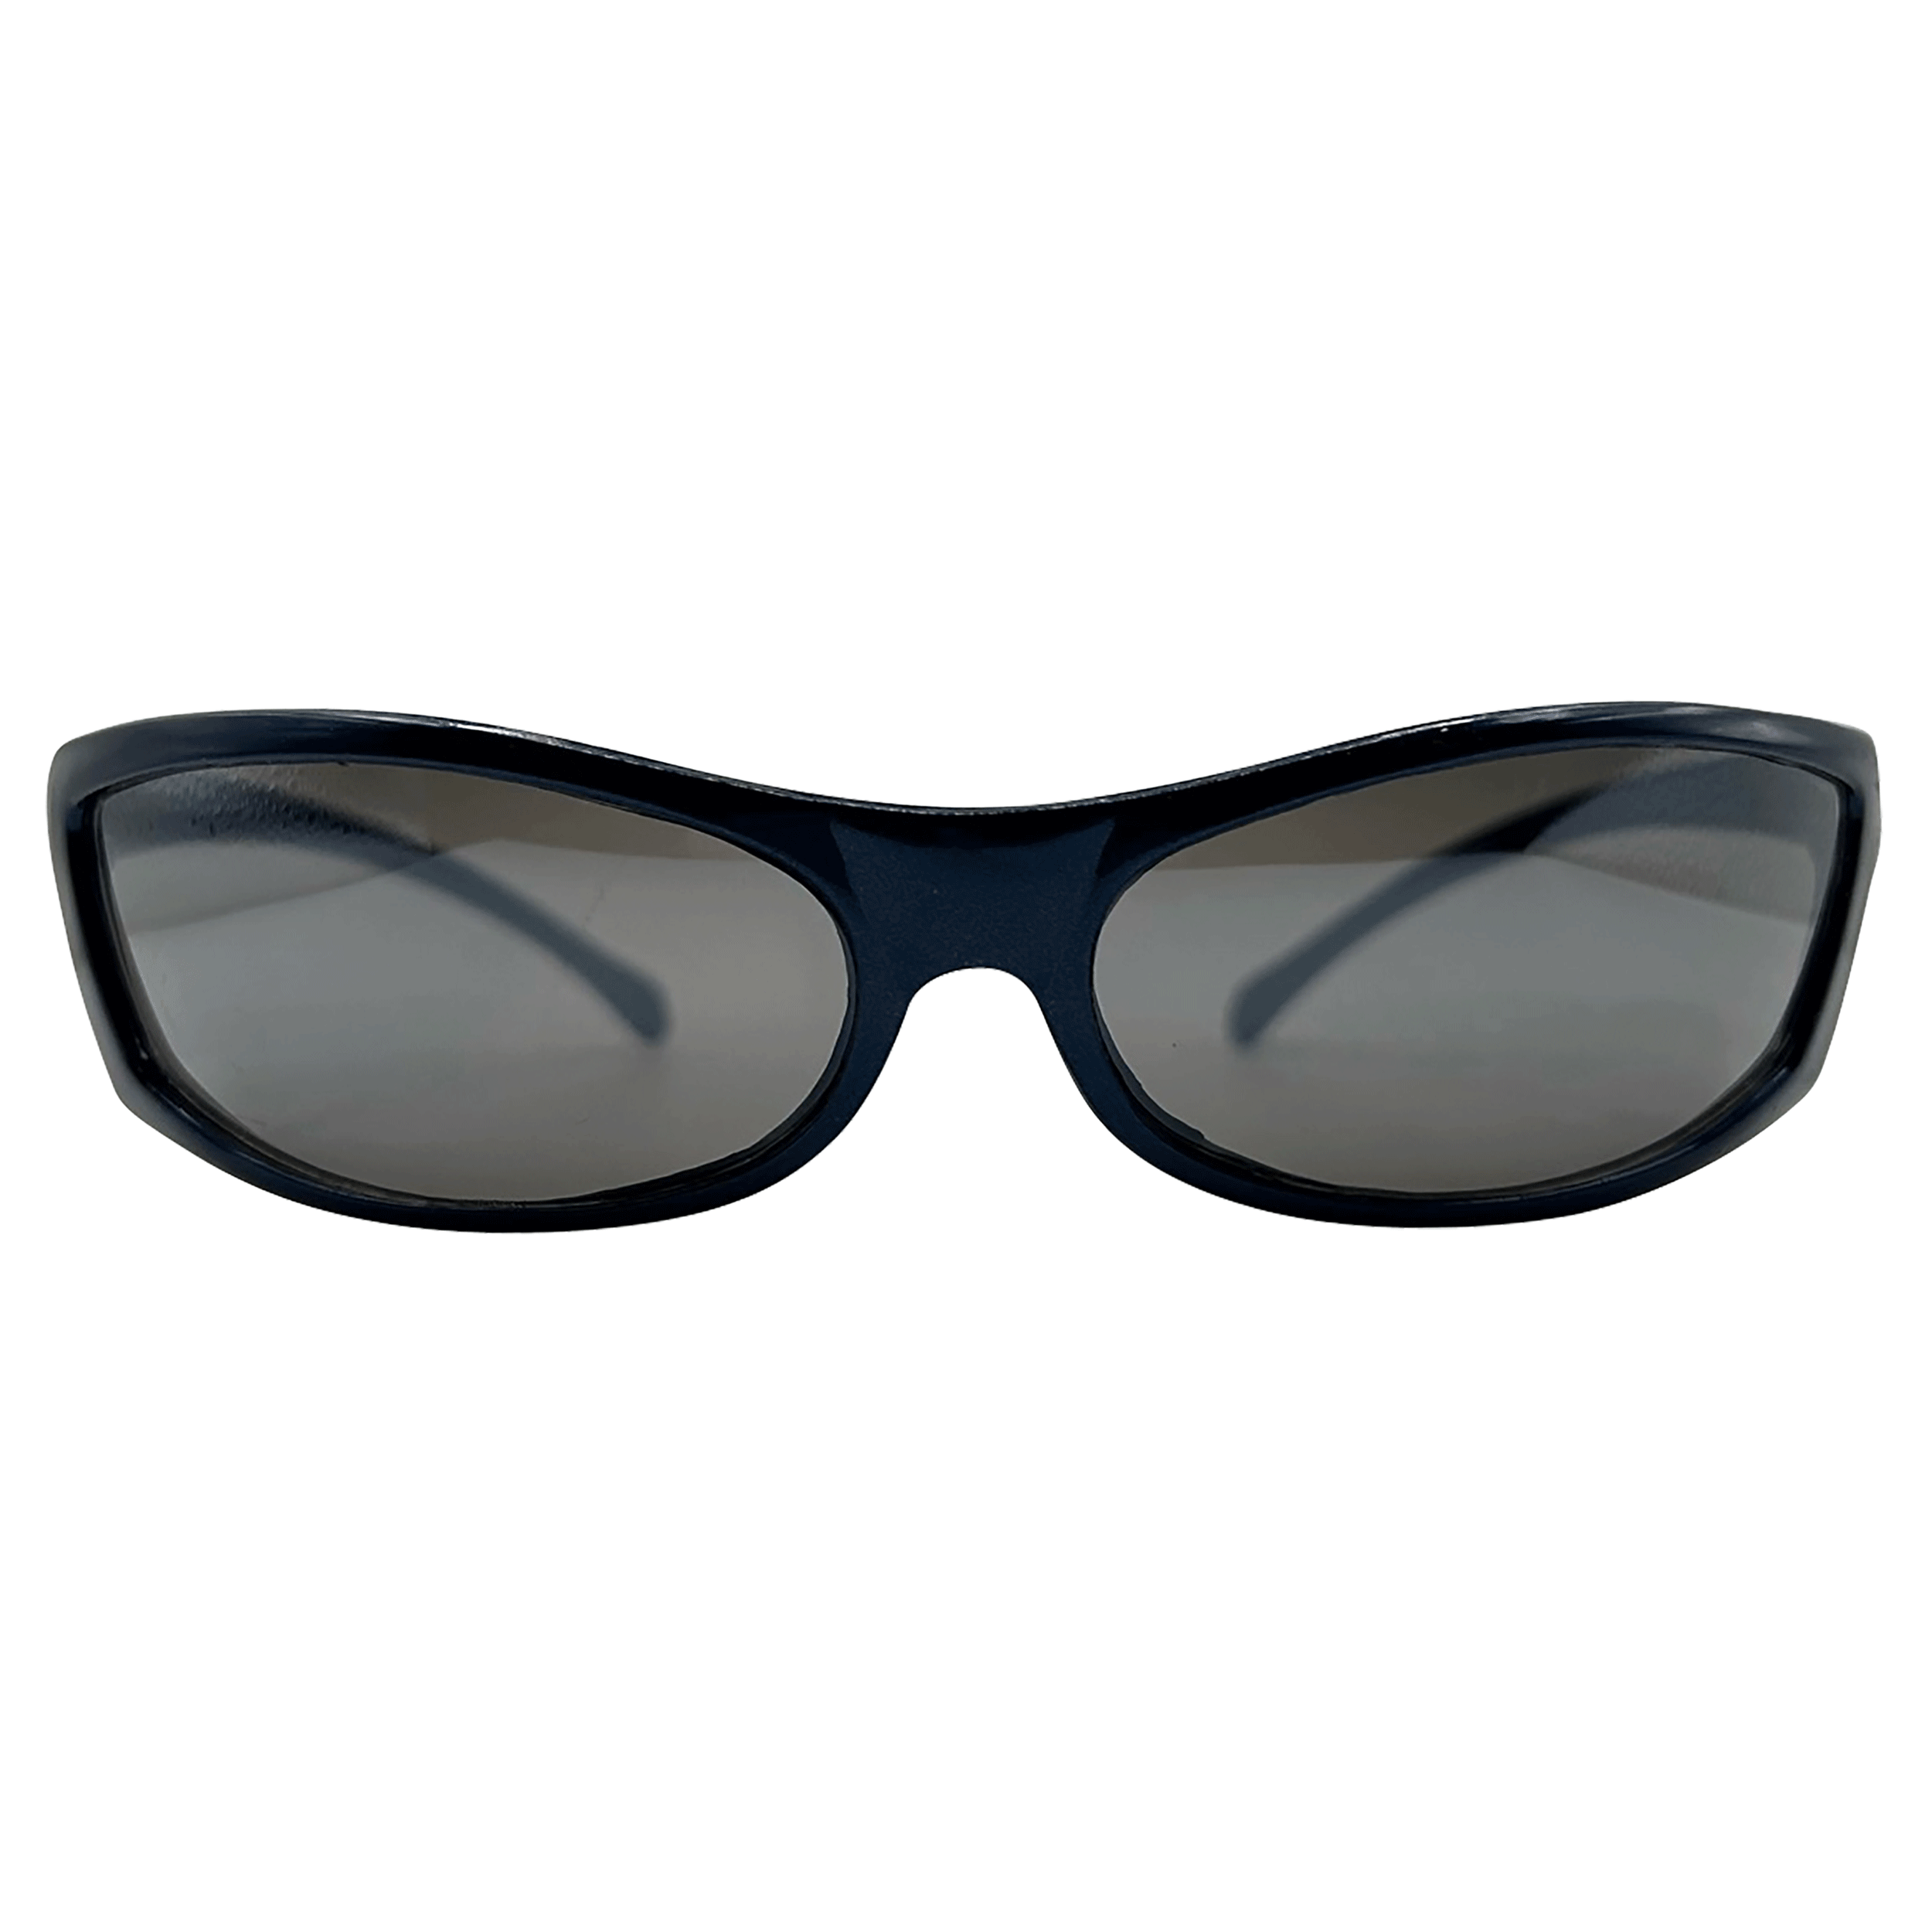 PLEAZER Cat-Eye Sports Sunglasses